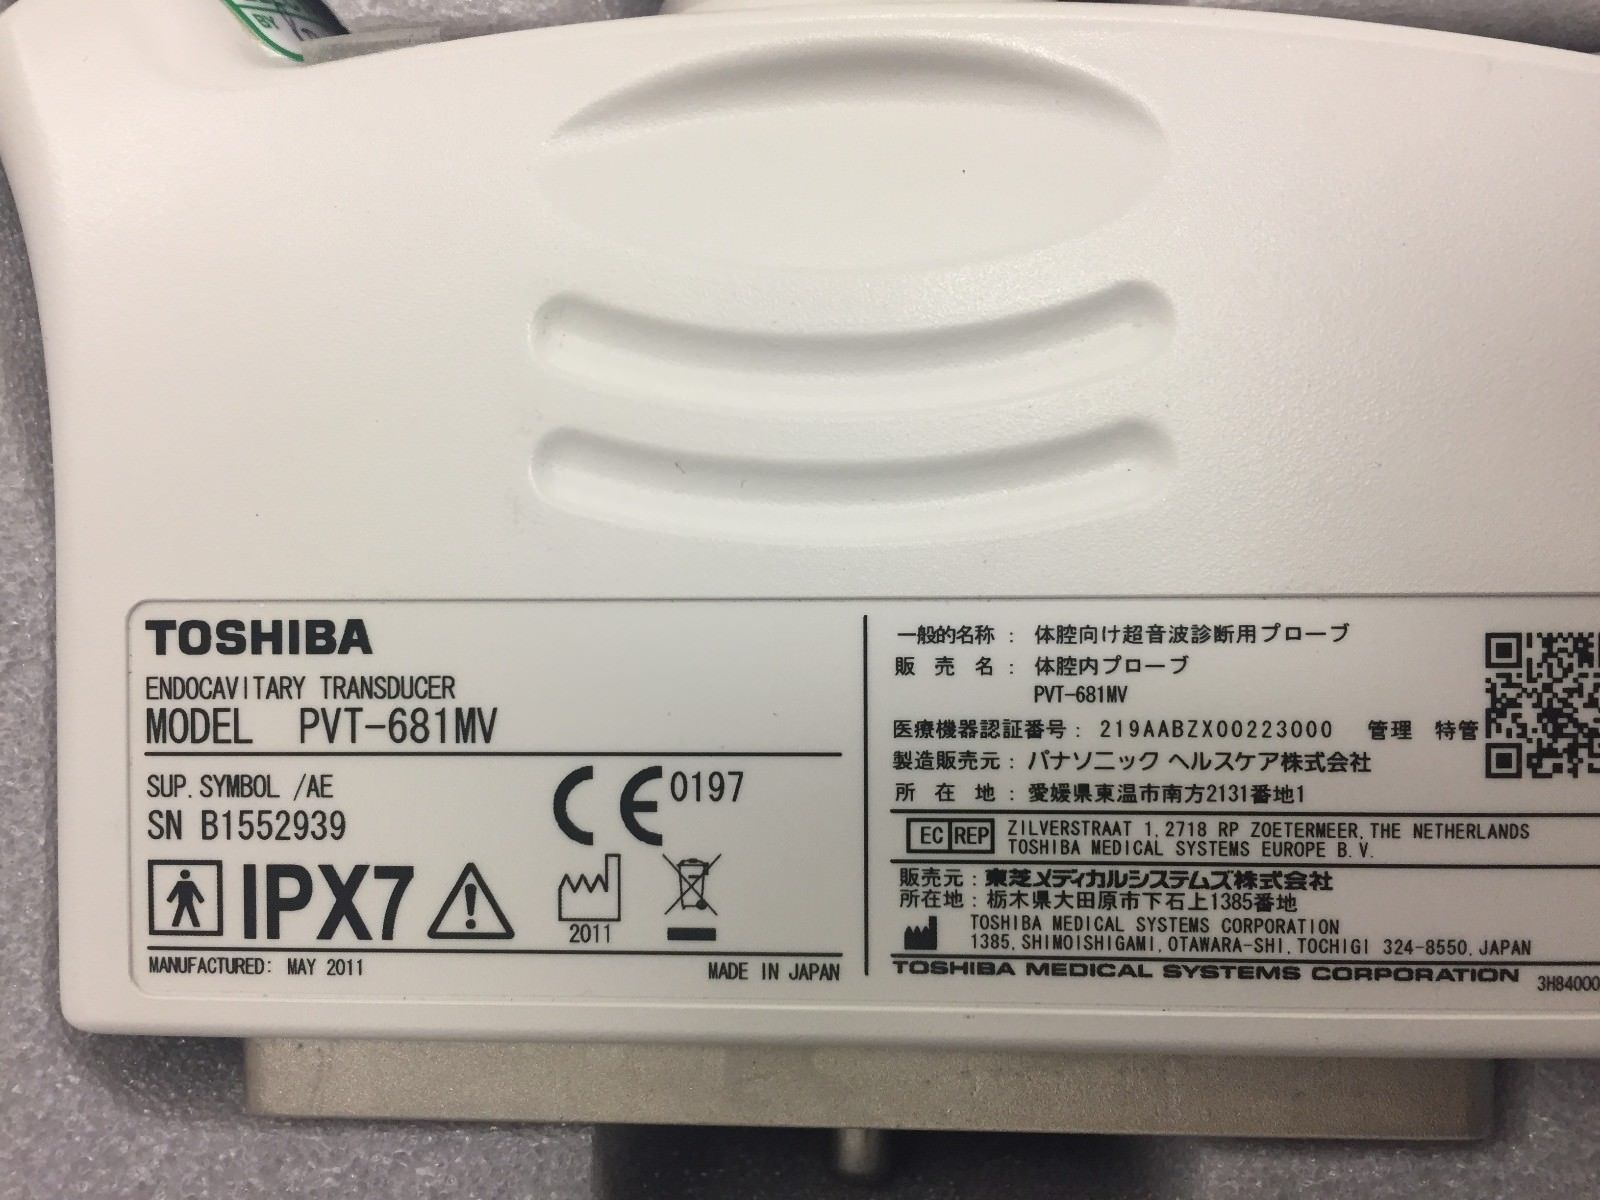 Toshiba PVT-681MV Ultrasound Transducer DIAGNOSTIC ULTRASOUND MACHINES FOR SALE